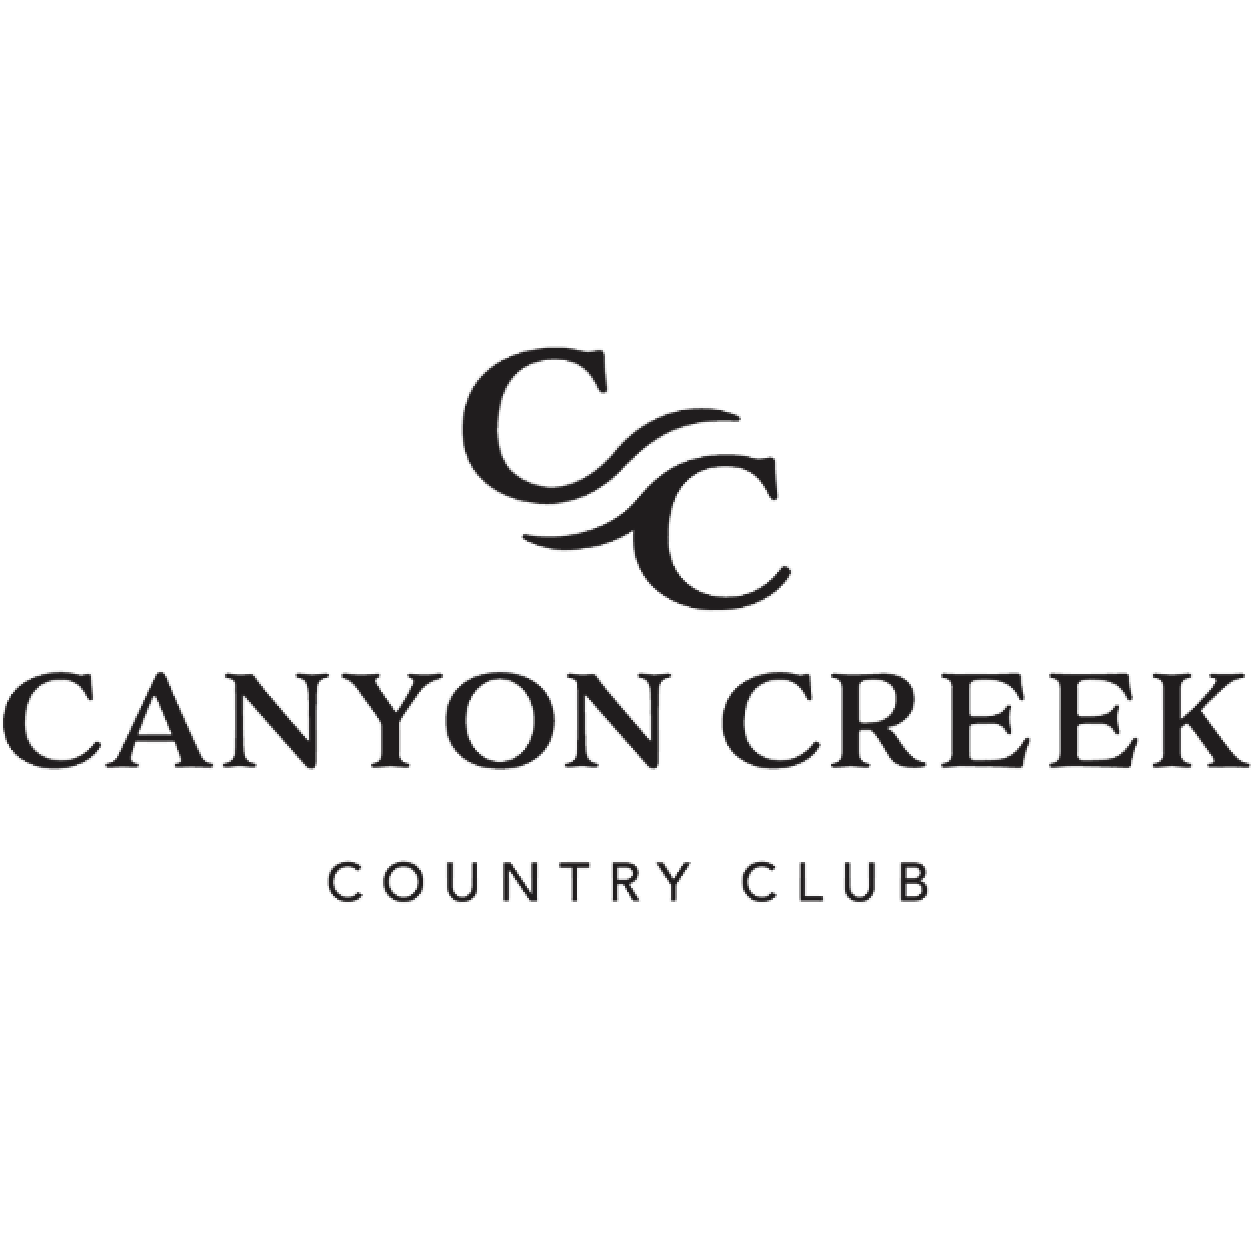 Canyon creek country club -